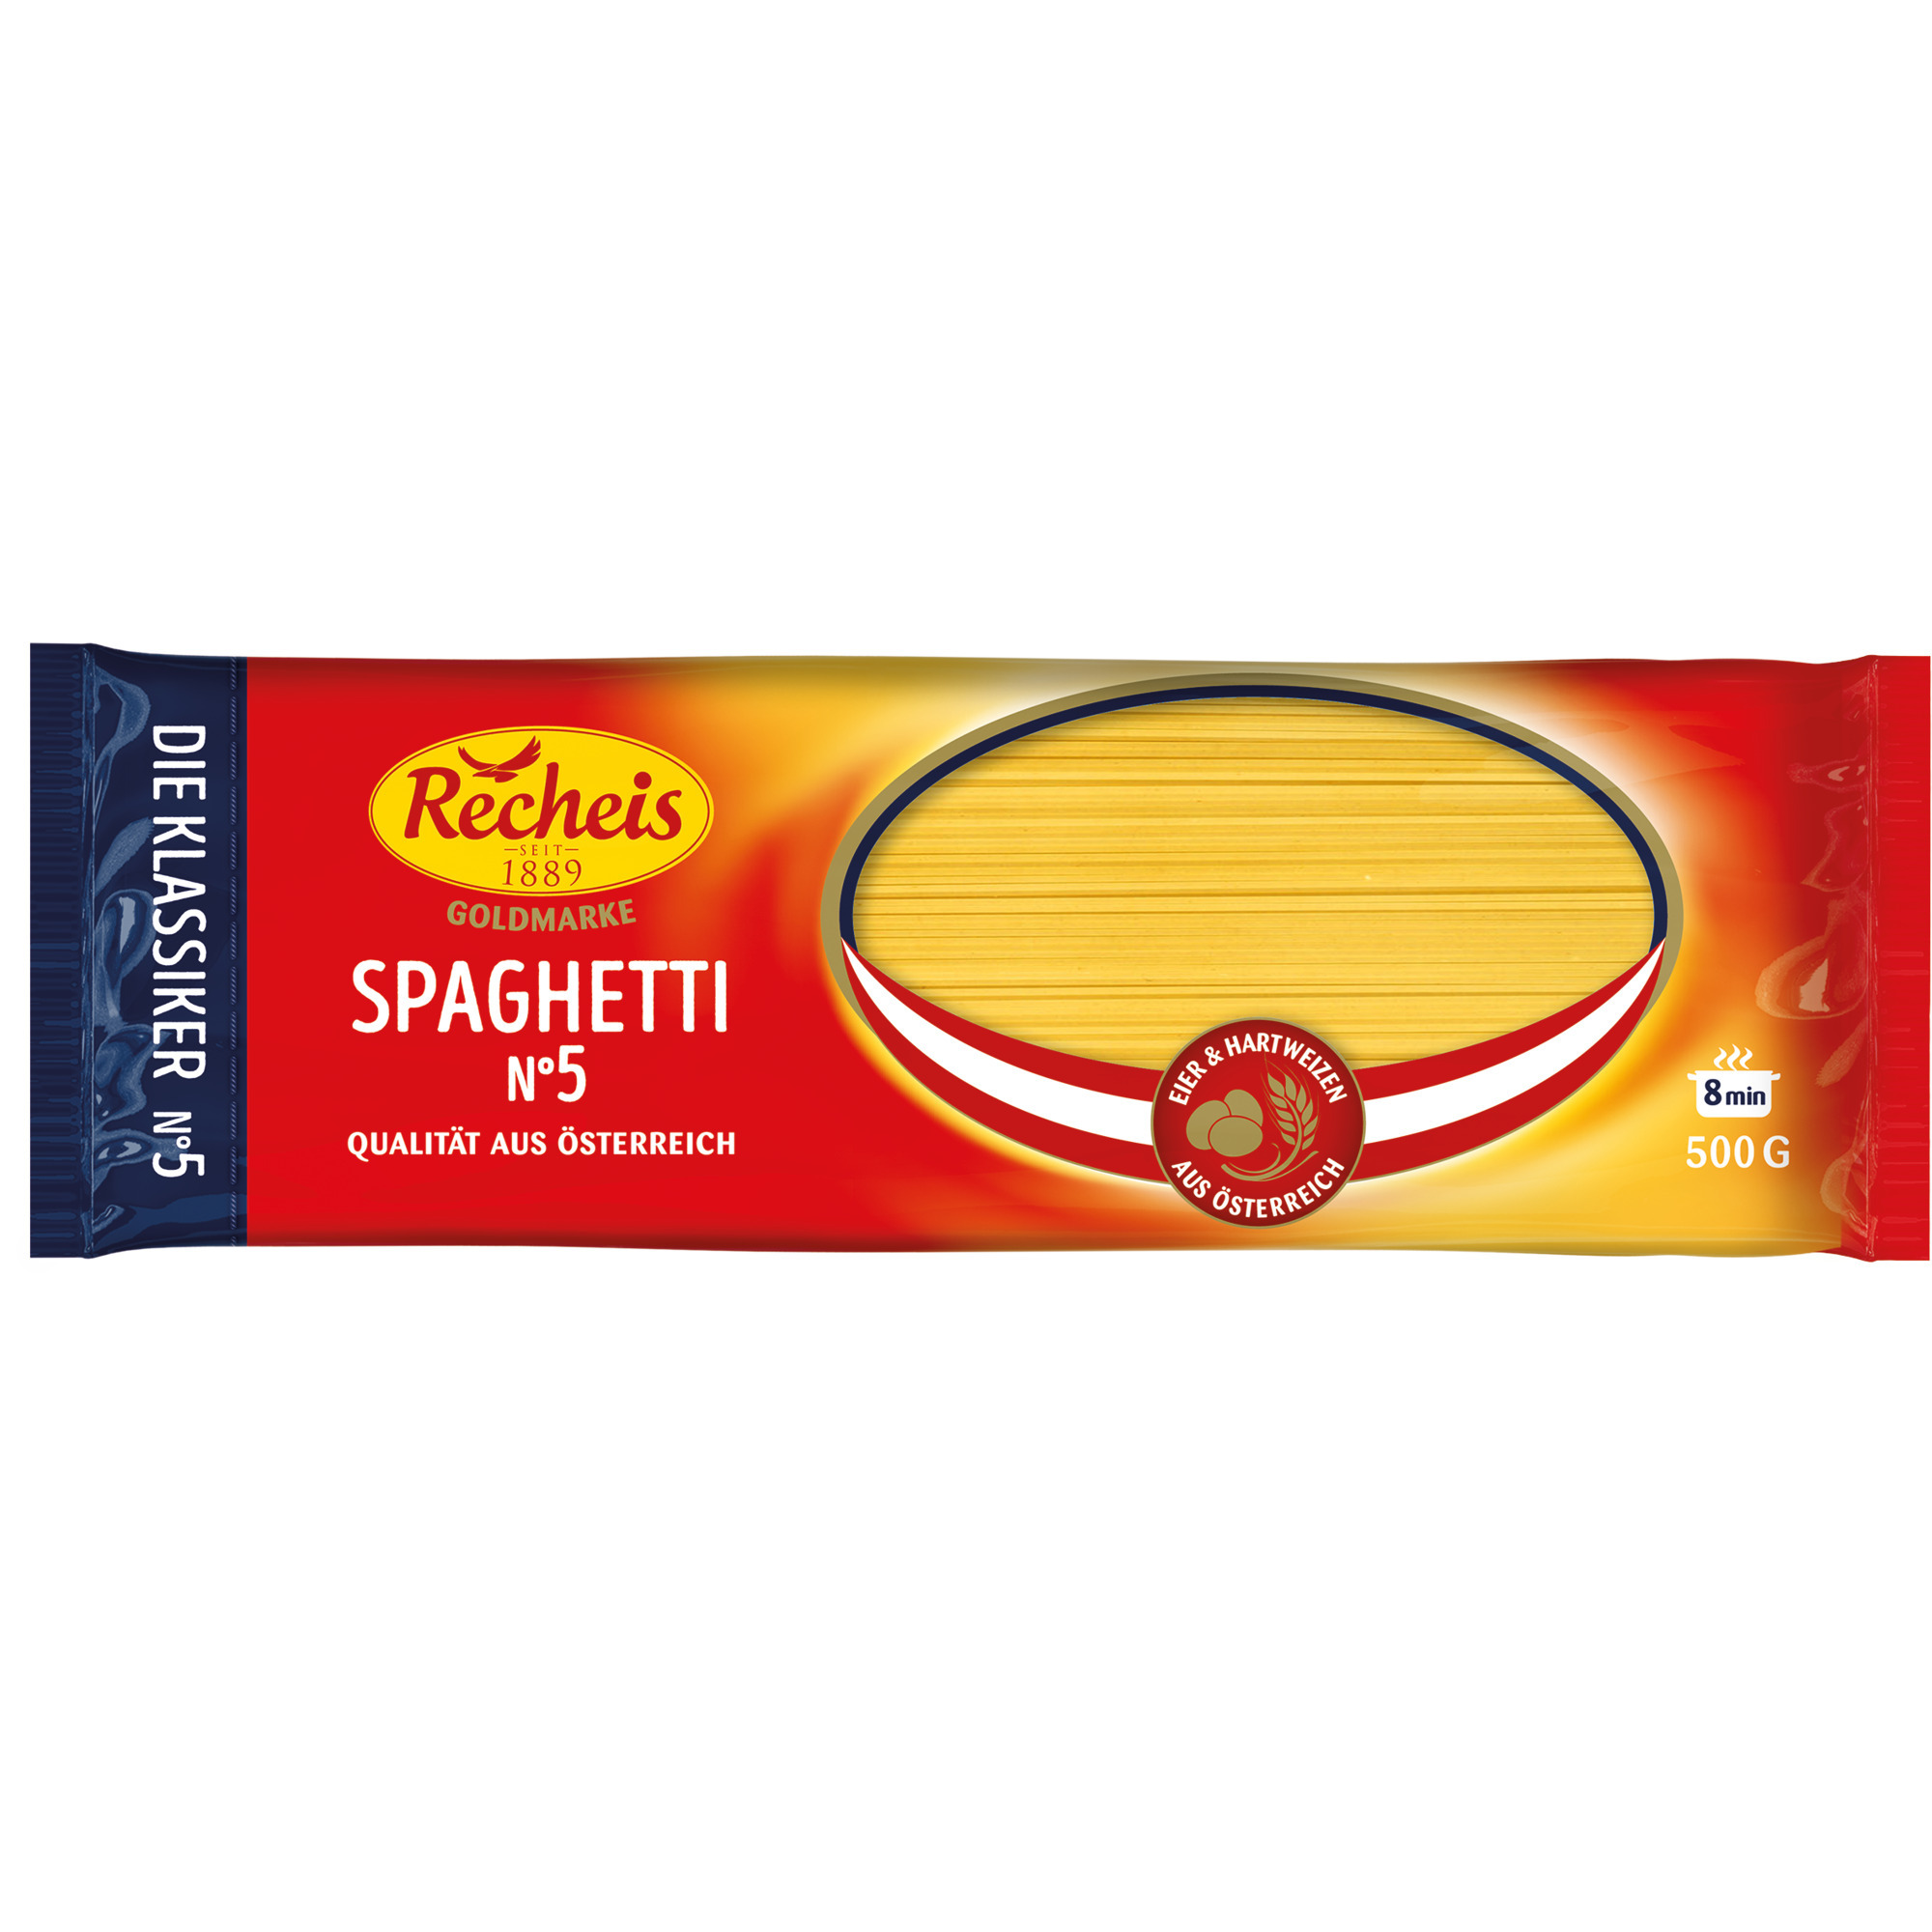 Recheis Goldmarke 500g, Spaghetti